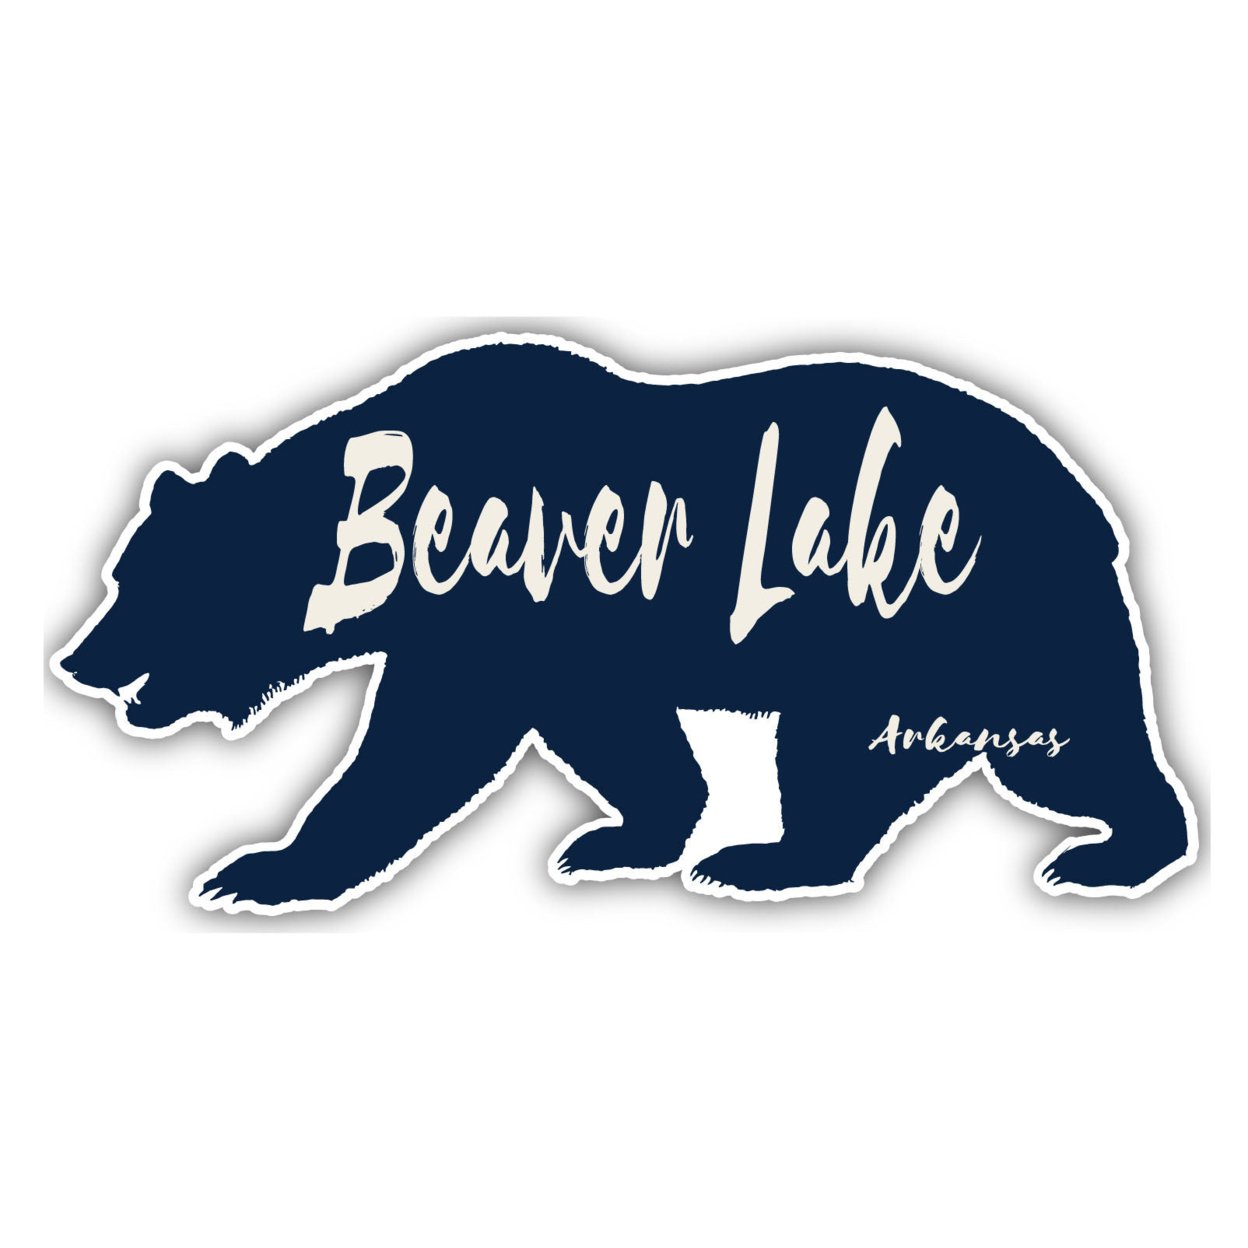 Beaver Lake Arkansas Souvenir Decorative Stickers (Choose Theme And Size) - 4-Pack, 10-Inch, Adventures Awaits